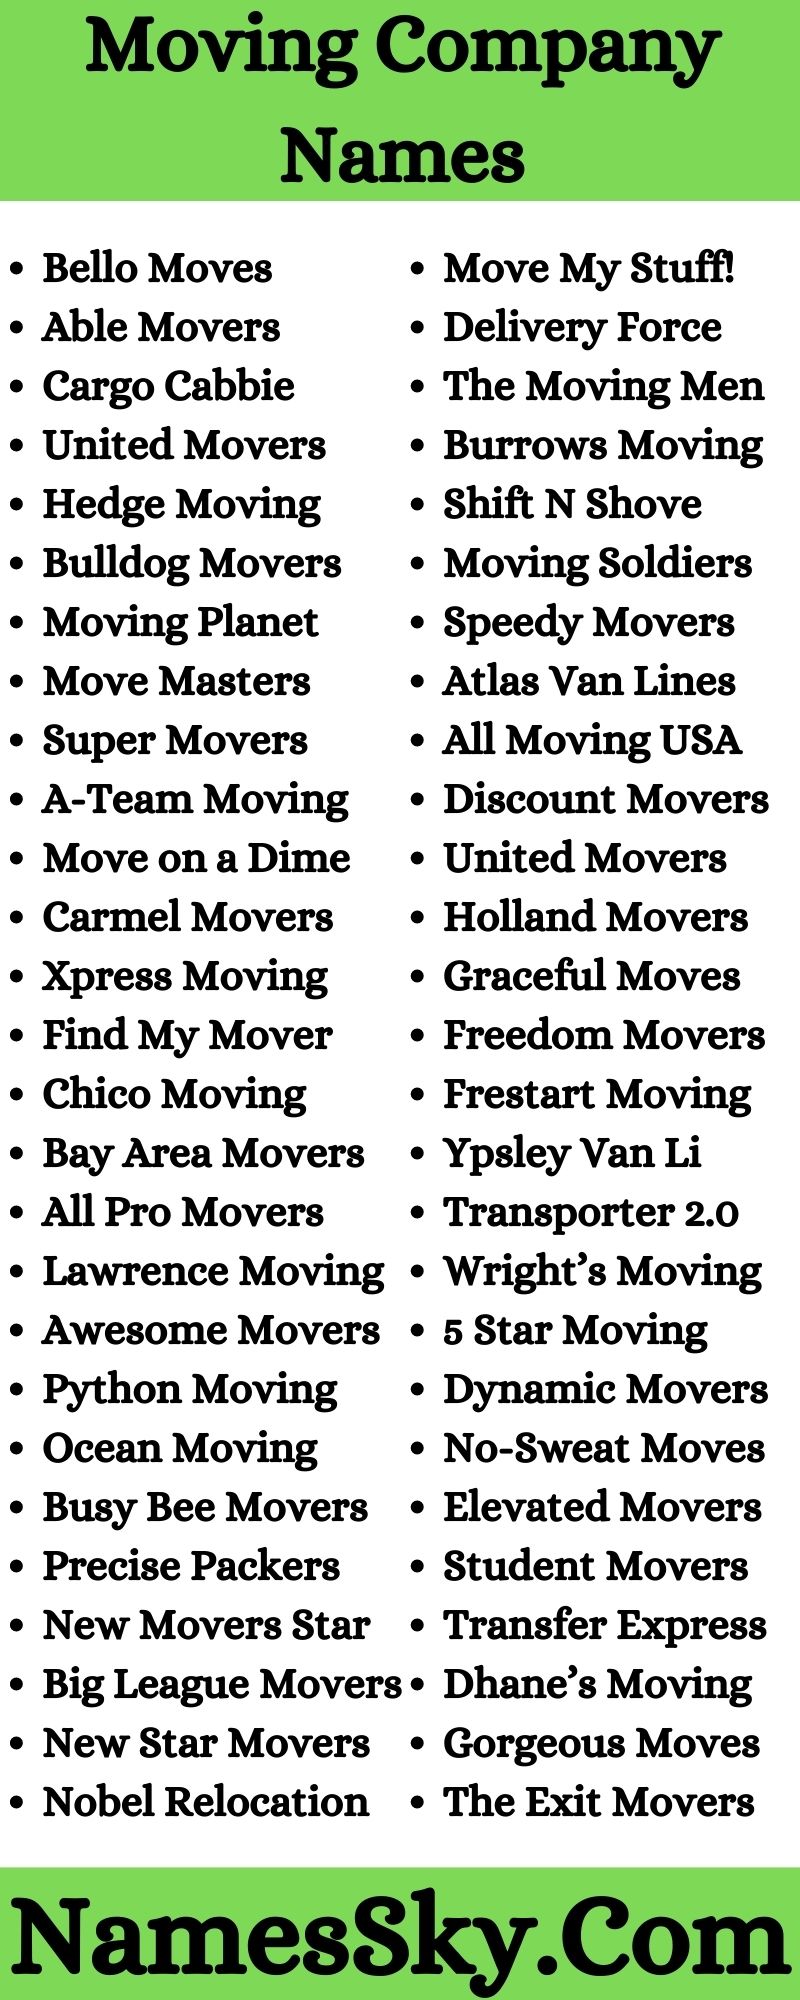 Moving Company Names